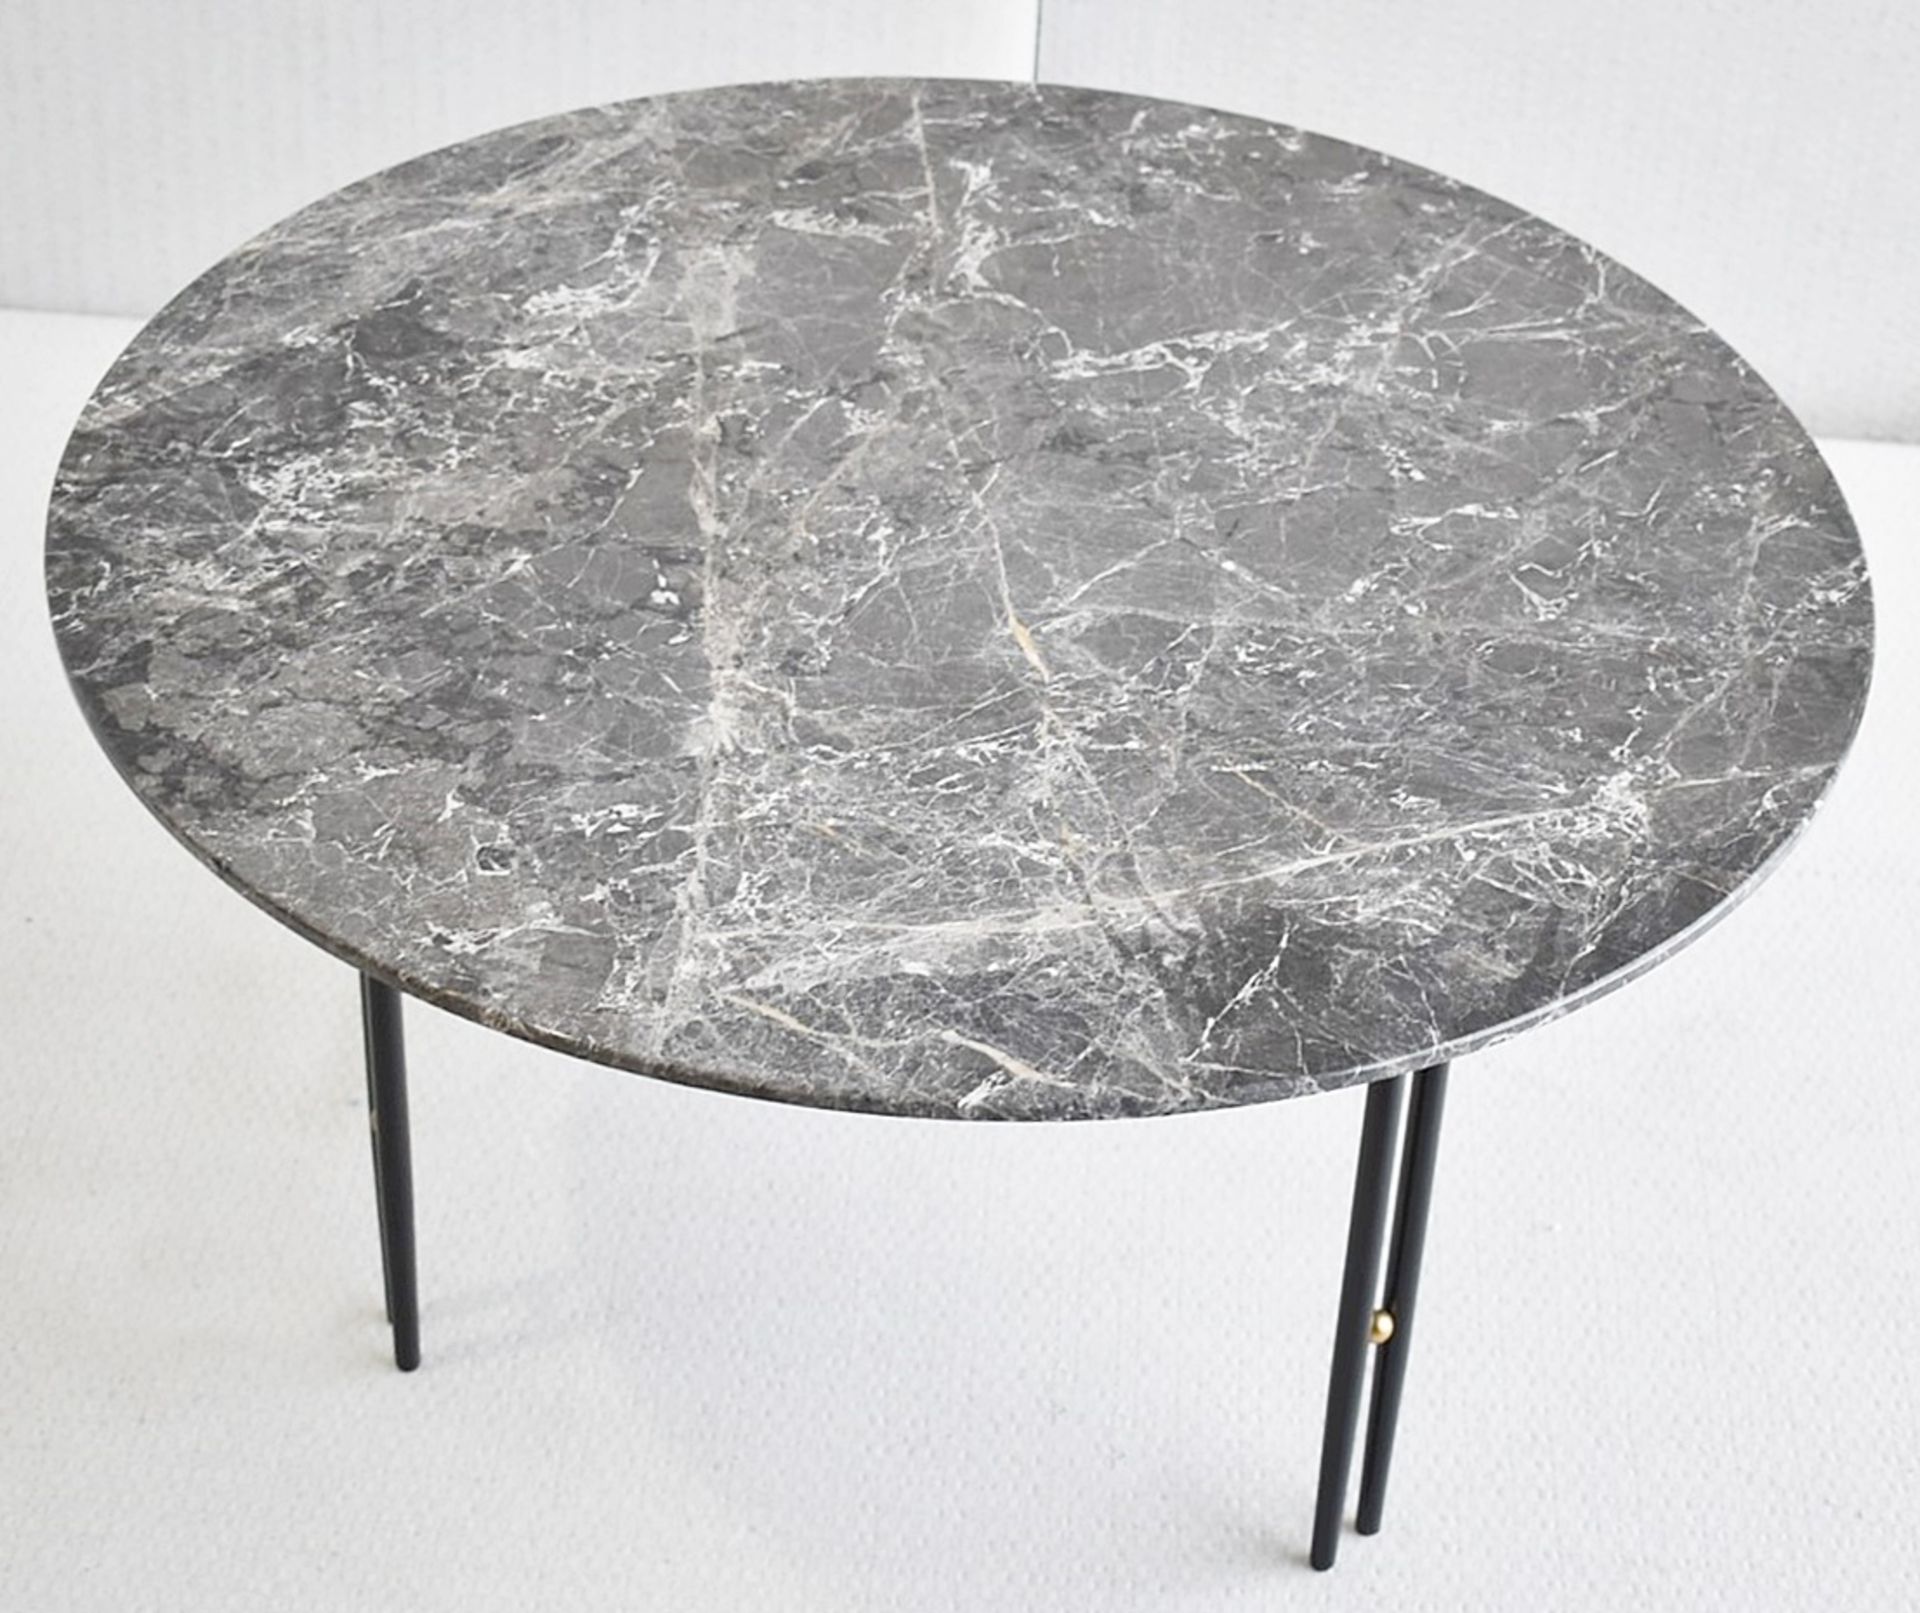 1 x GUBI 'IOI' Round Designer Marble Topped Coffee Table, ⌀70cm - Original RRP £1,025 - Image 3 of 8